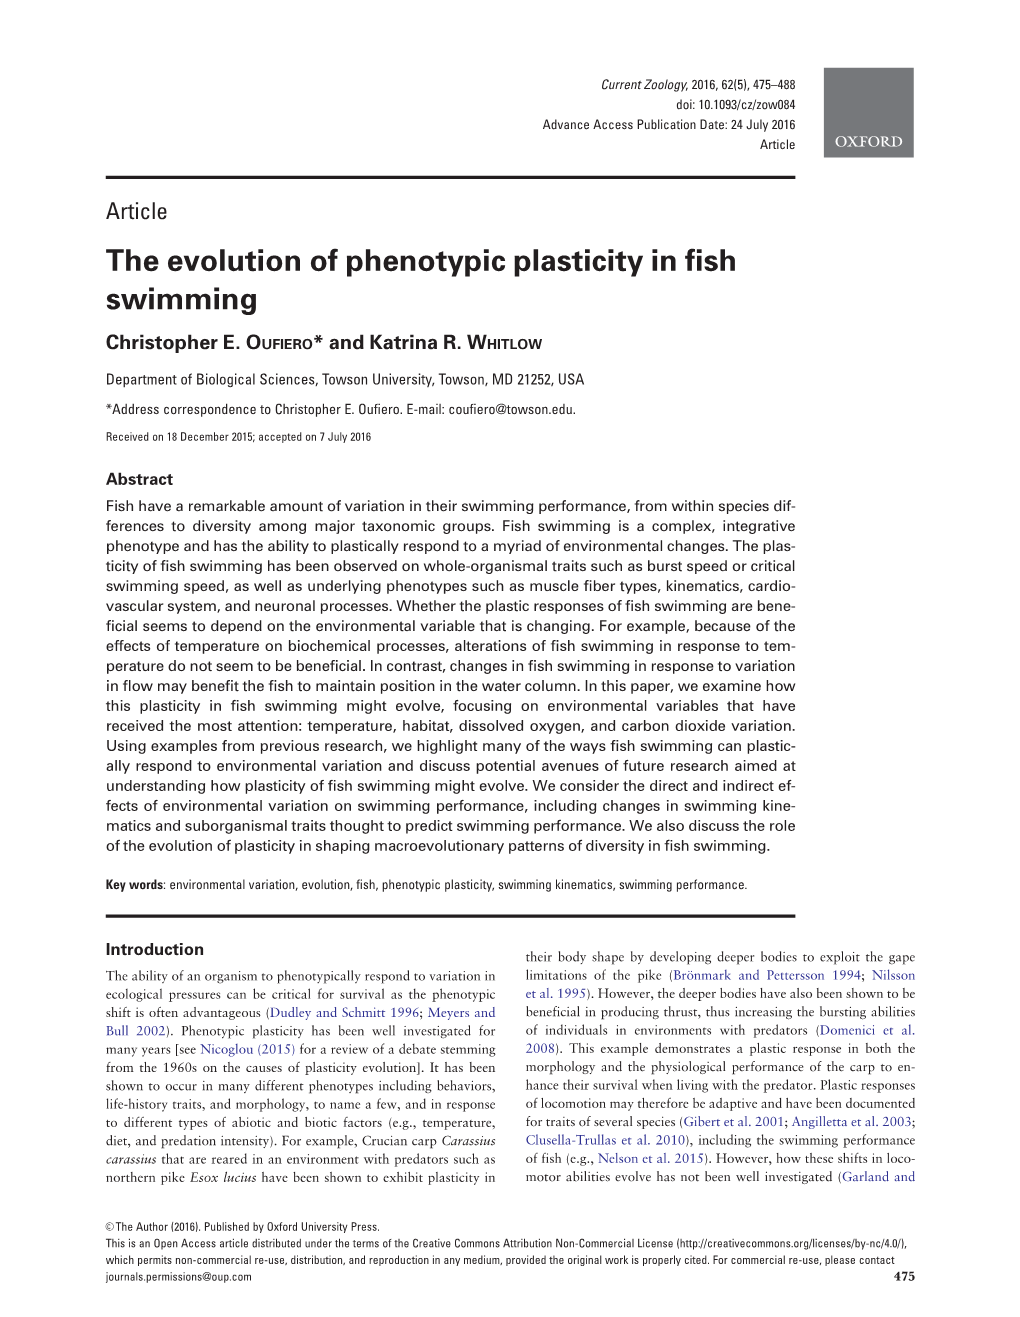 The Evolution of Phenotypic Plasticity in Fish Swimming